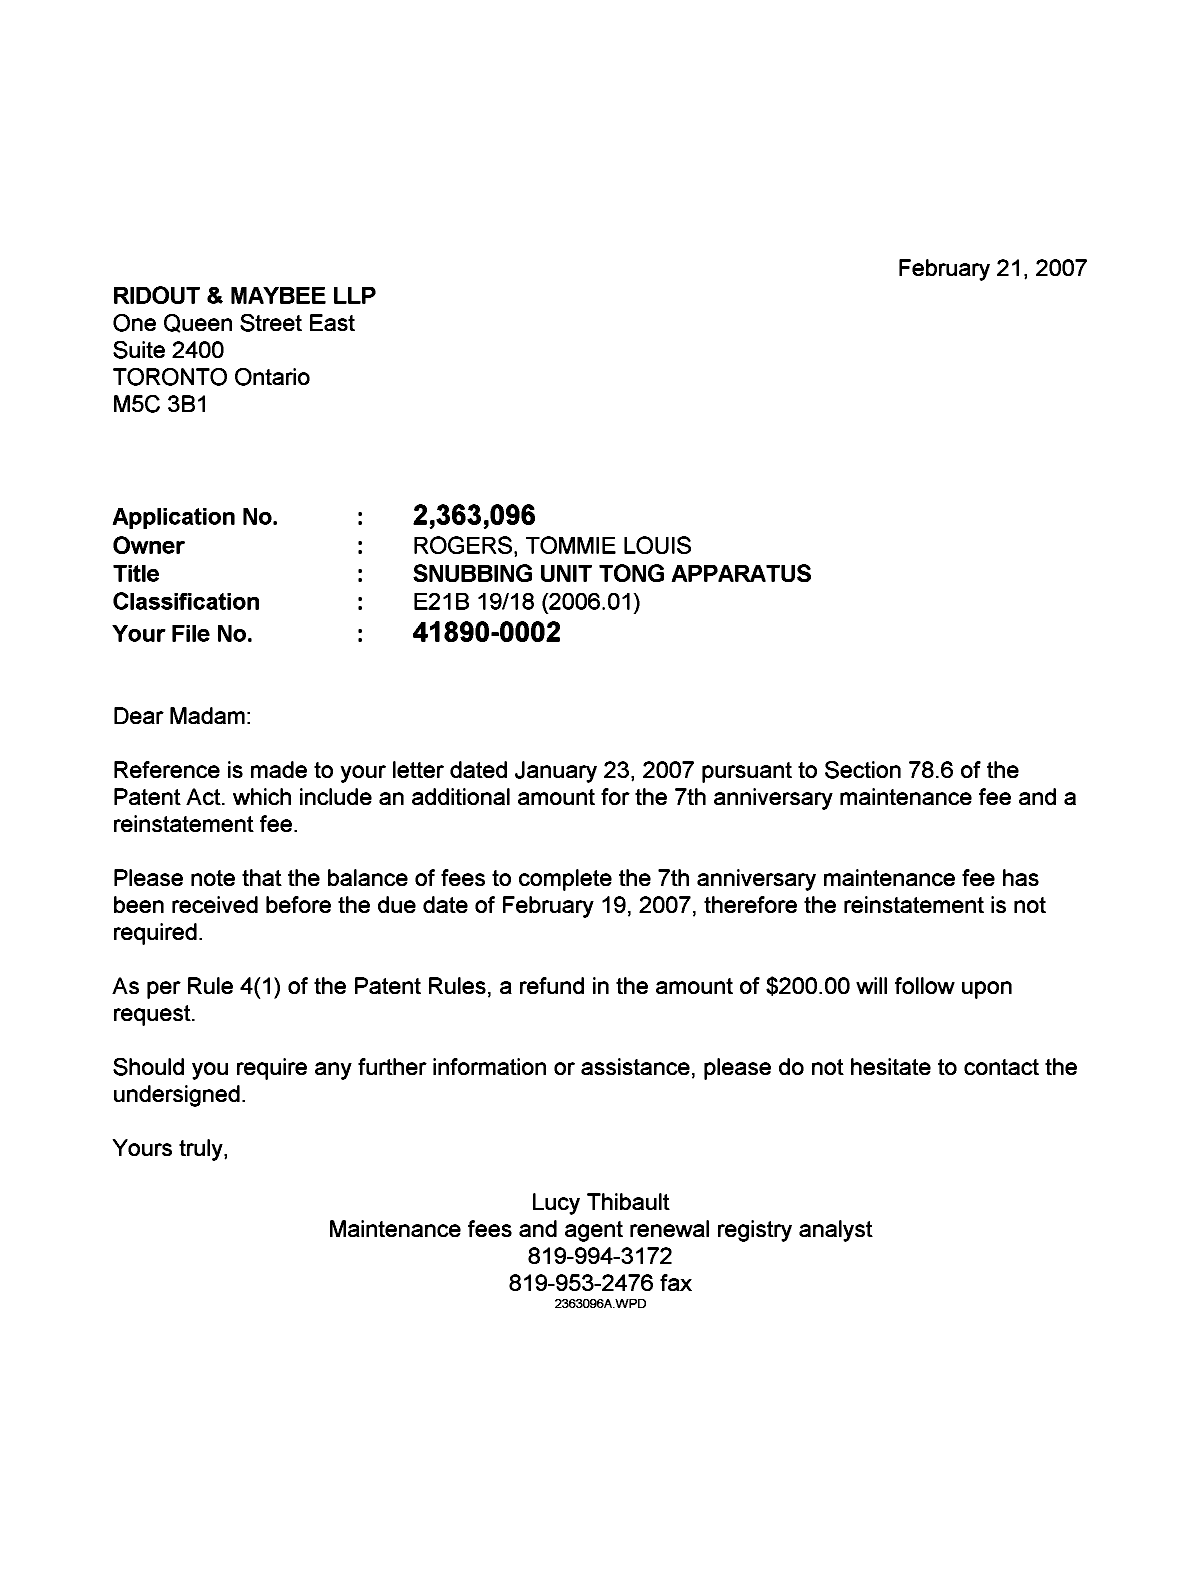 Canadian Patent Document 2363096. Correspondence 20070221. Image 1 of 1